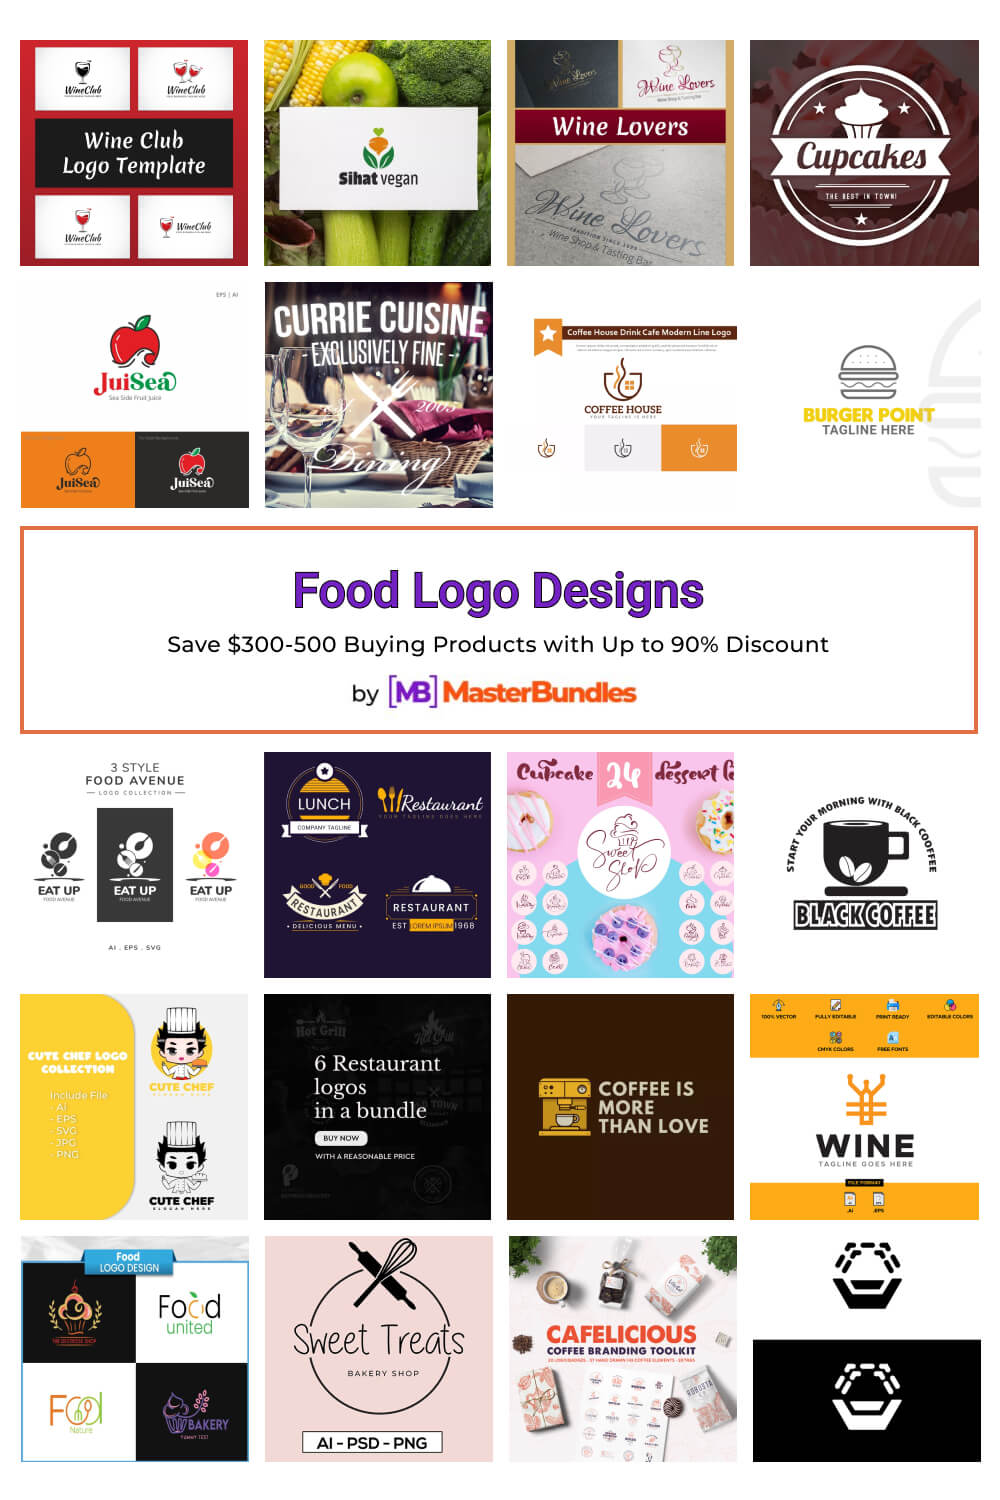 food logo designs pinterest image.